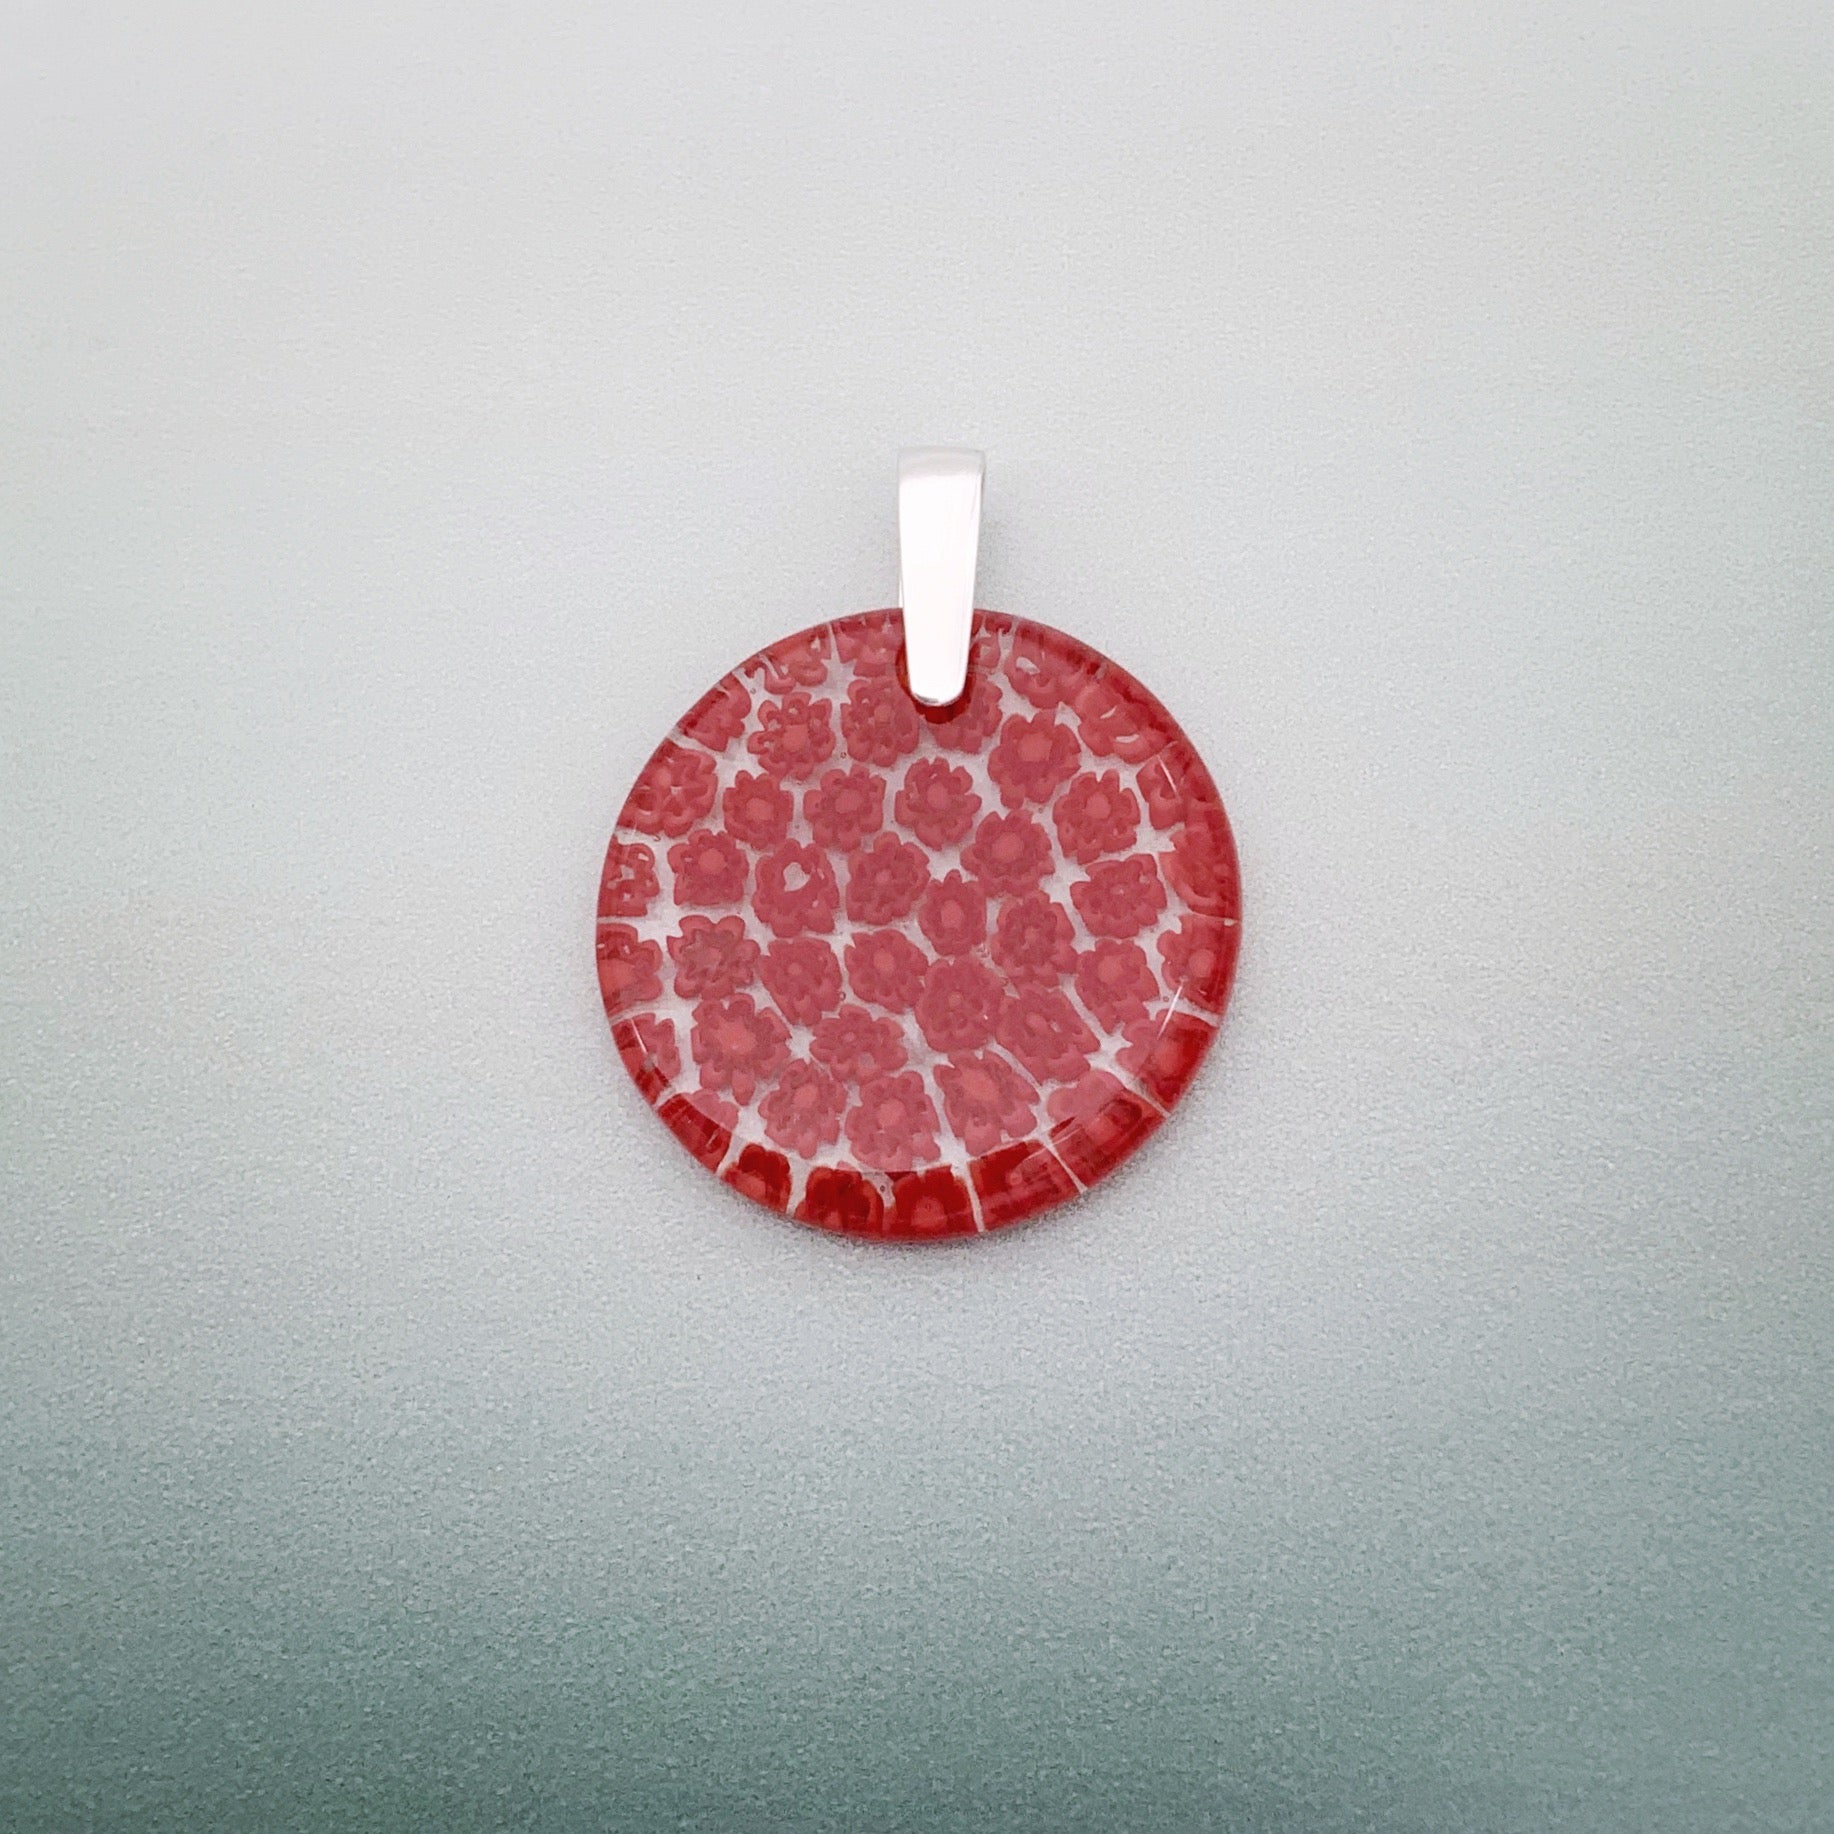 Fused millefiori 35mm round glass pendant in red fleurette